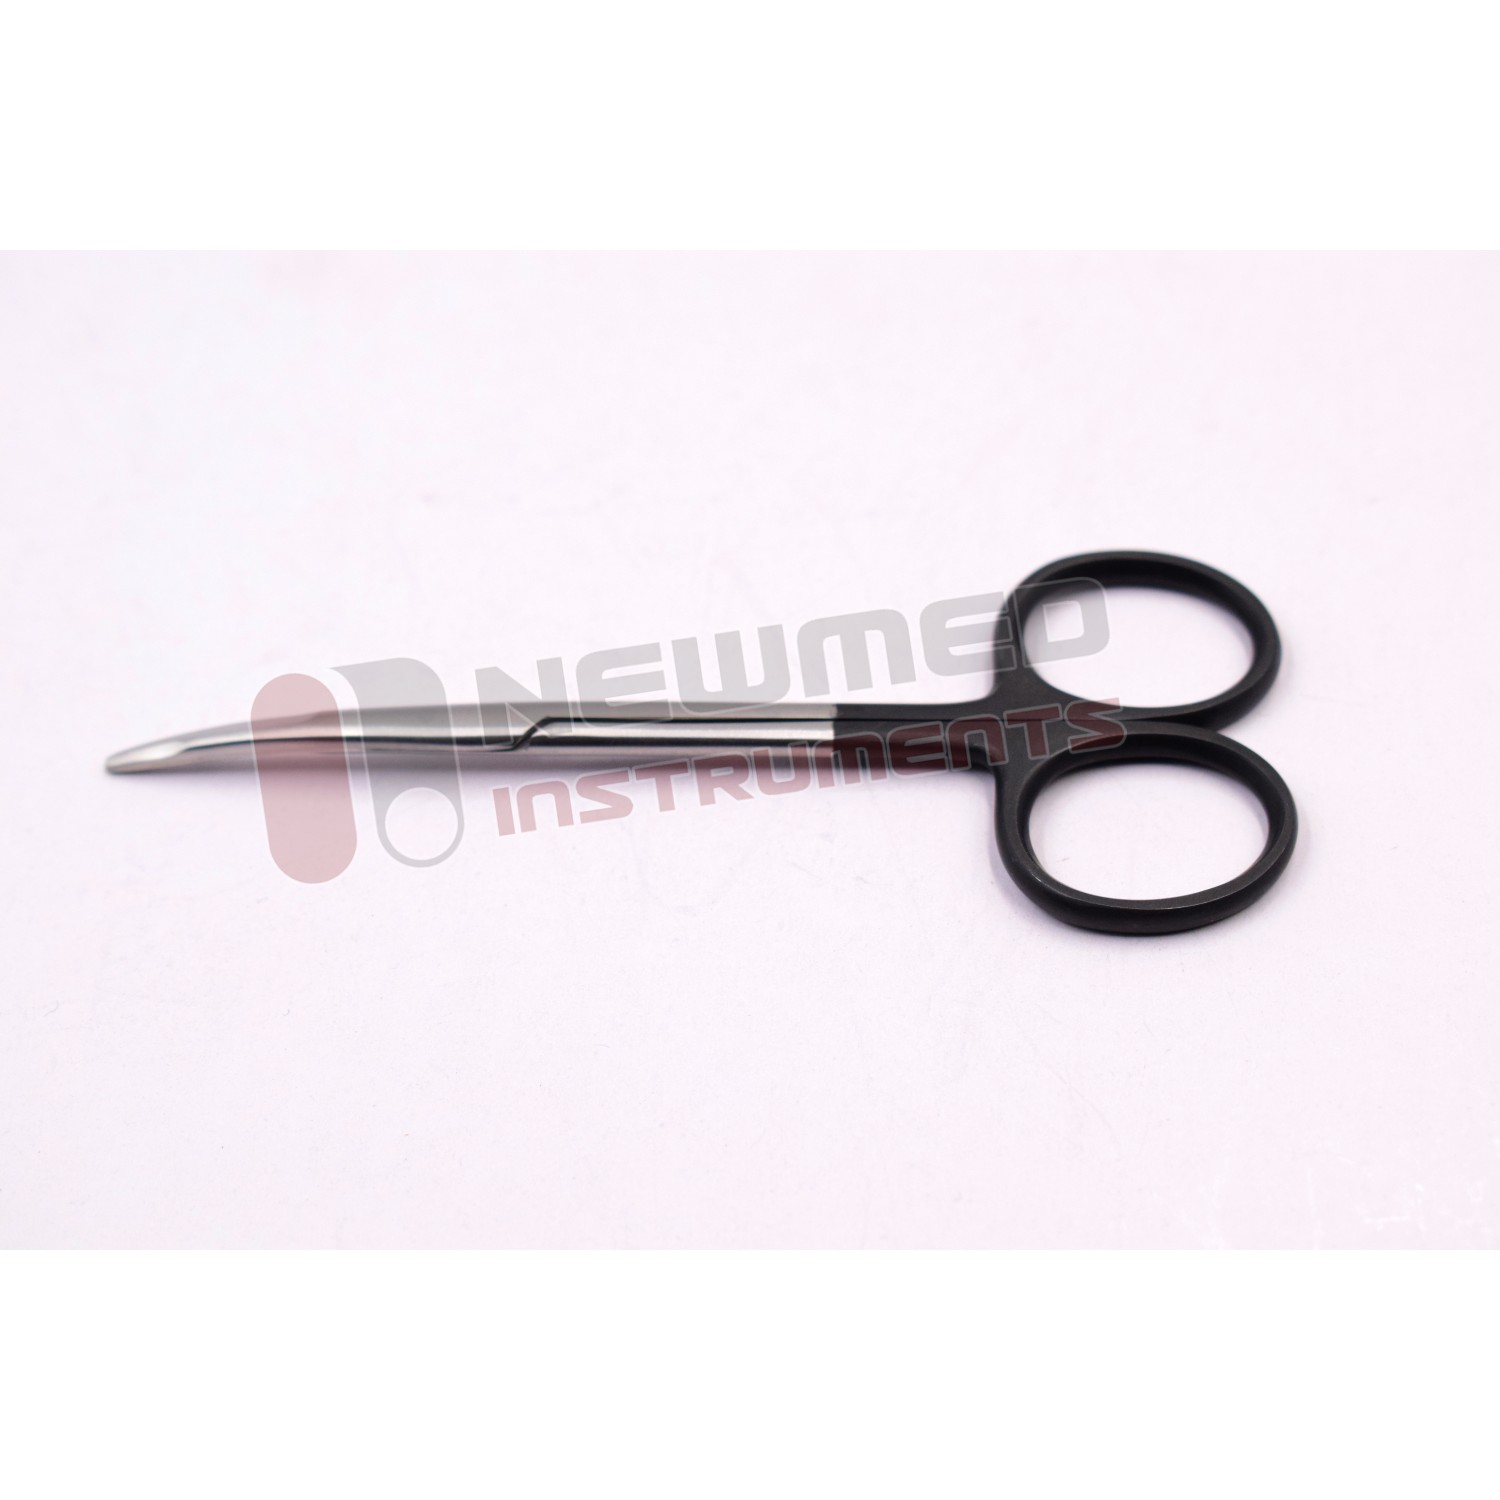 Owner® Super Cut Scissors - Owner Hooks